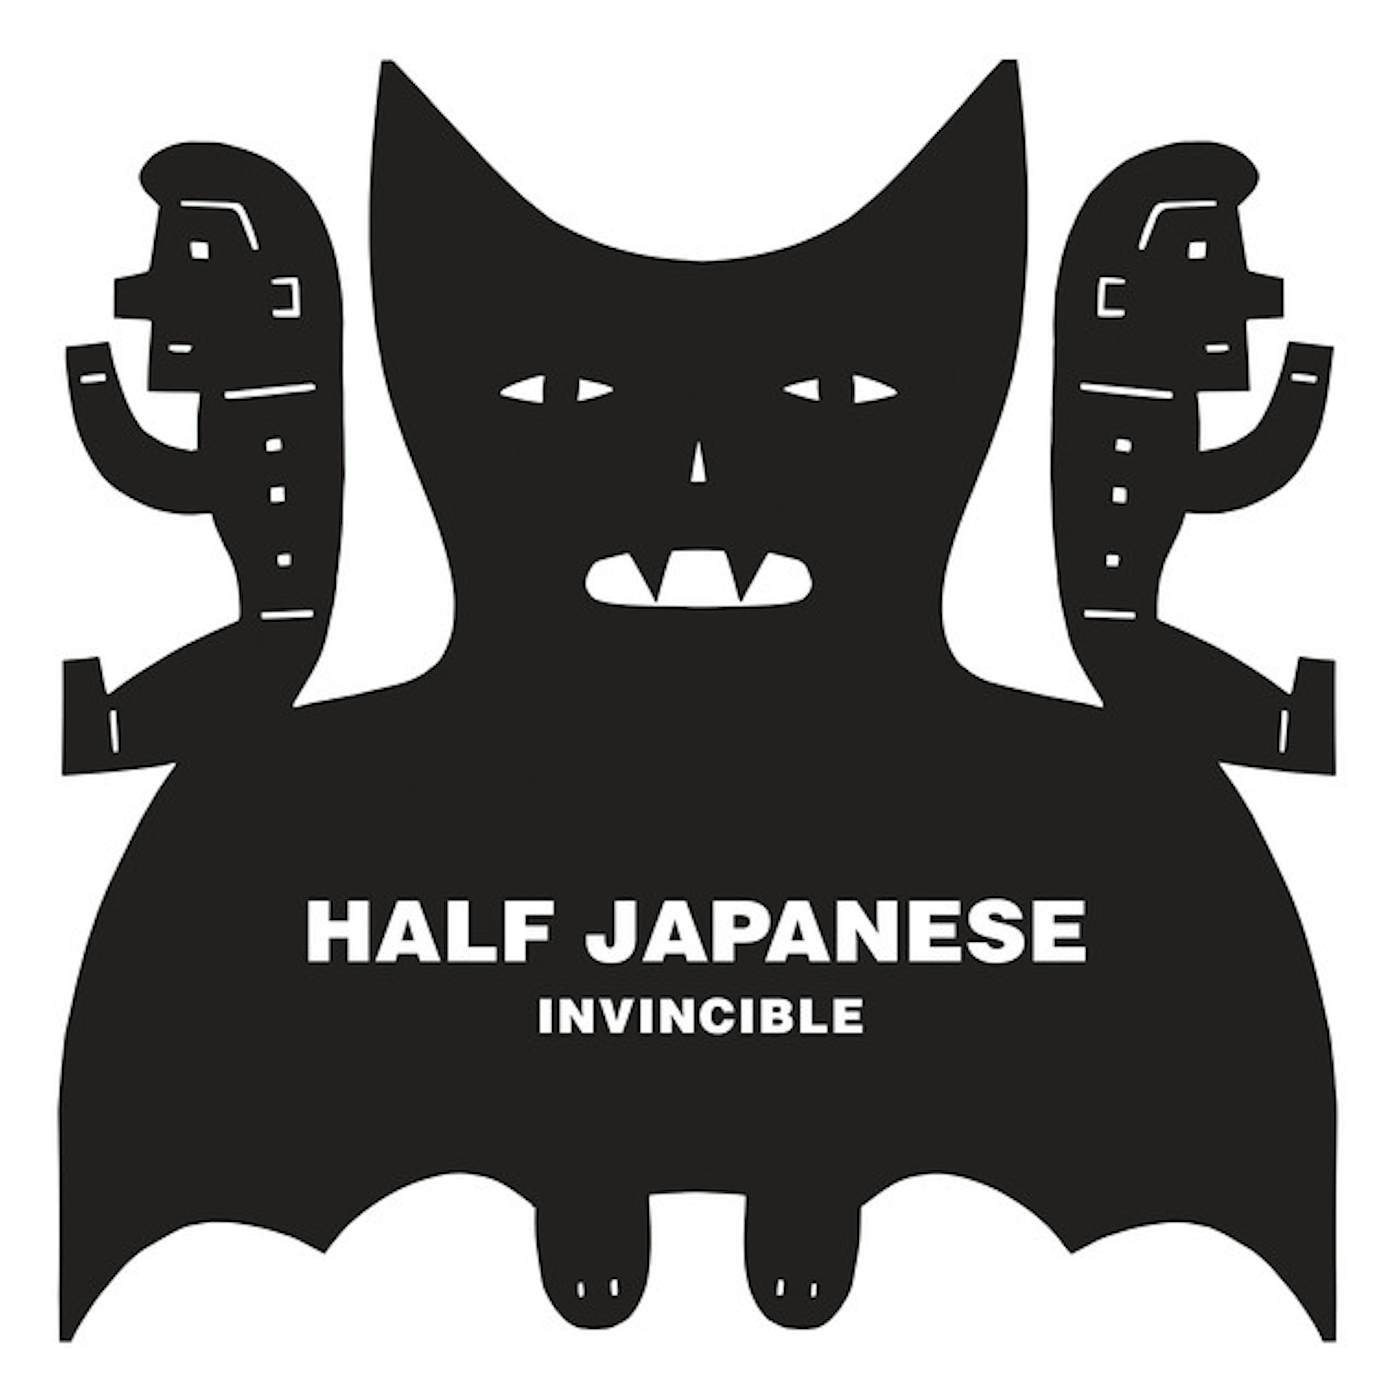 Half Japanese Invincible Vinyl Record